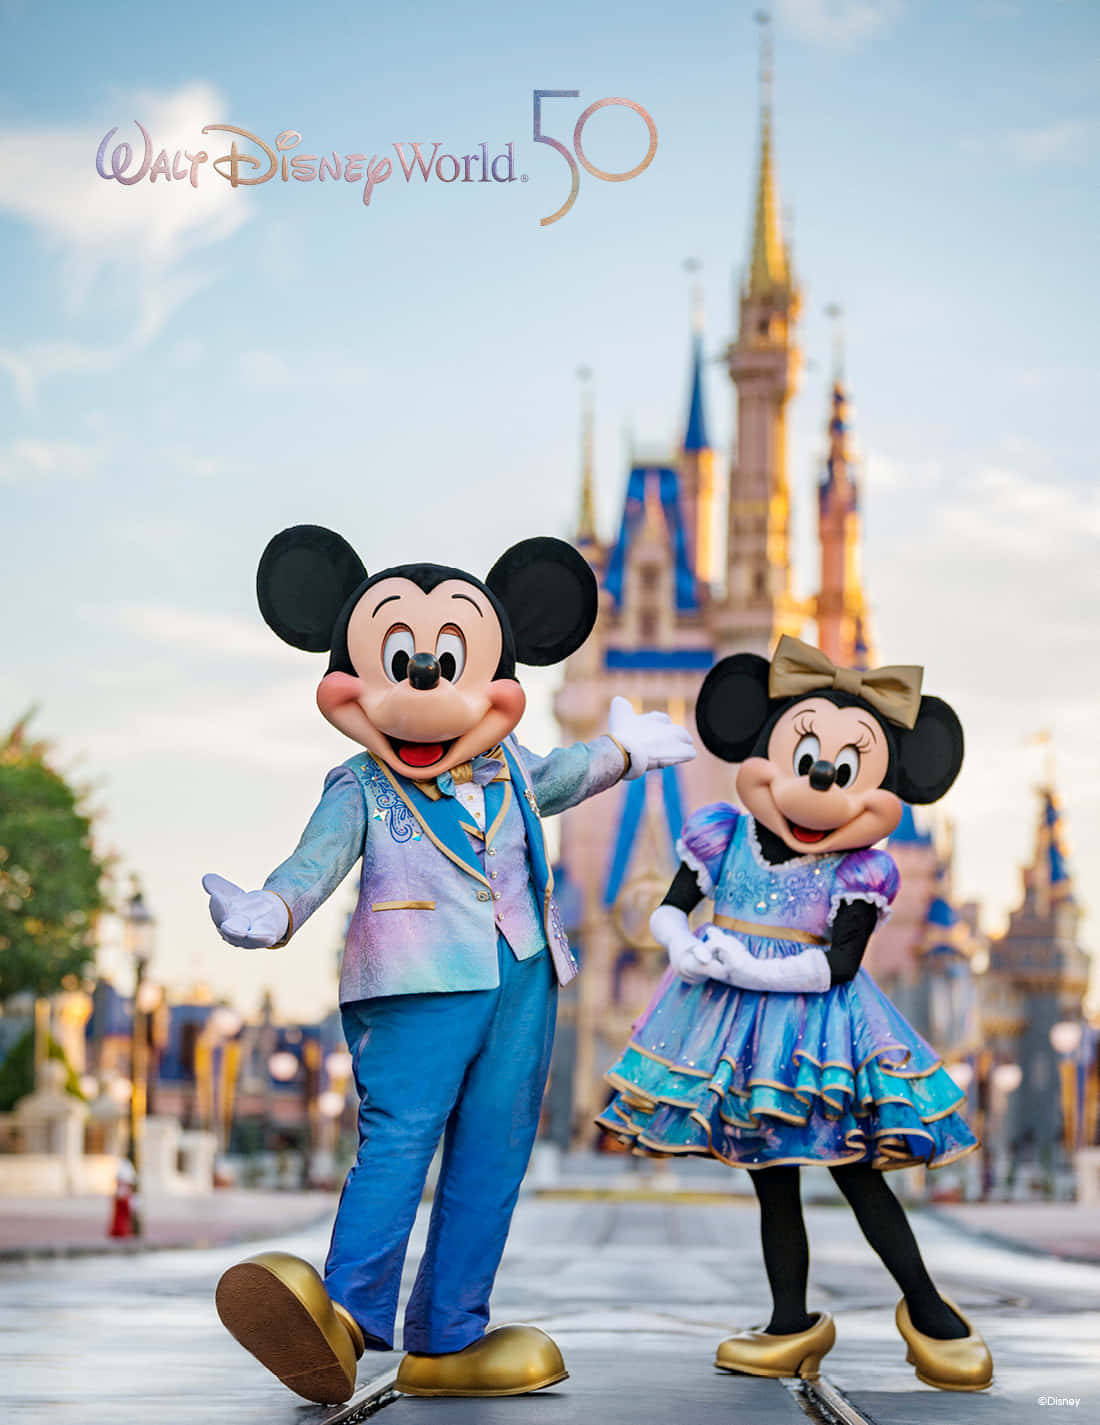 Enjoy magical adventures with Disney!